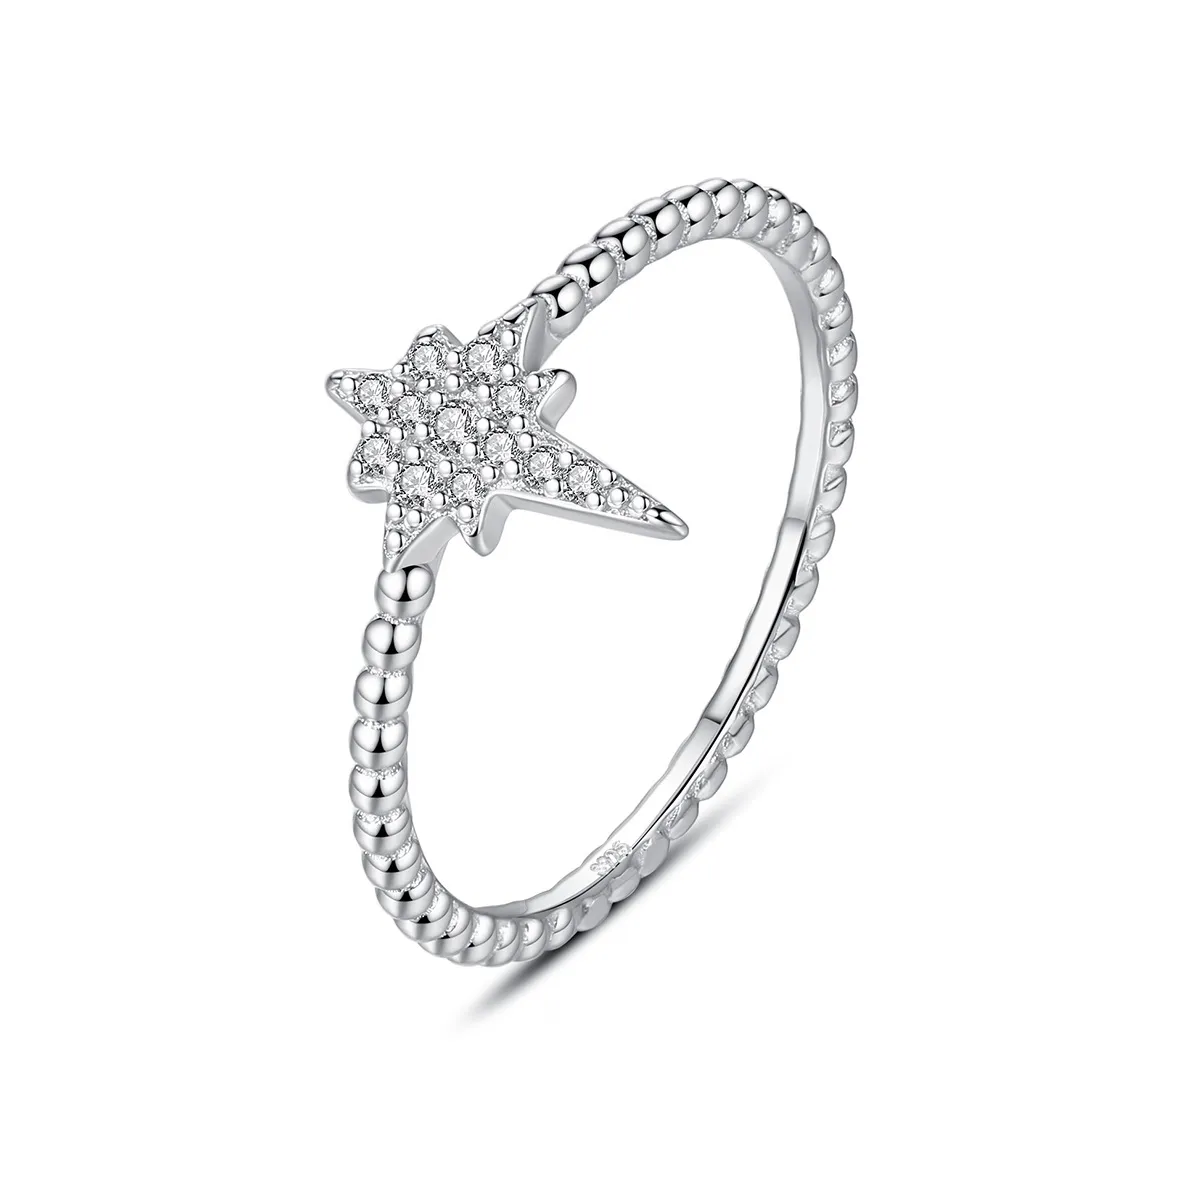 Novo micro conjunto de zircão oito awn estrela anel jóias moda europeia feminina S925 prata anel requintado para noivado feminino festa de casamento presente de dia dos namorados SPC